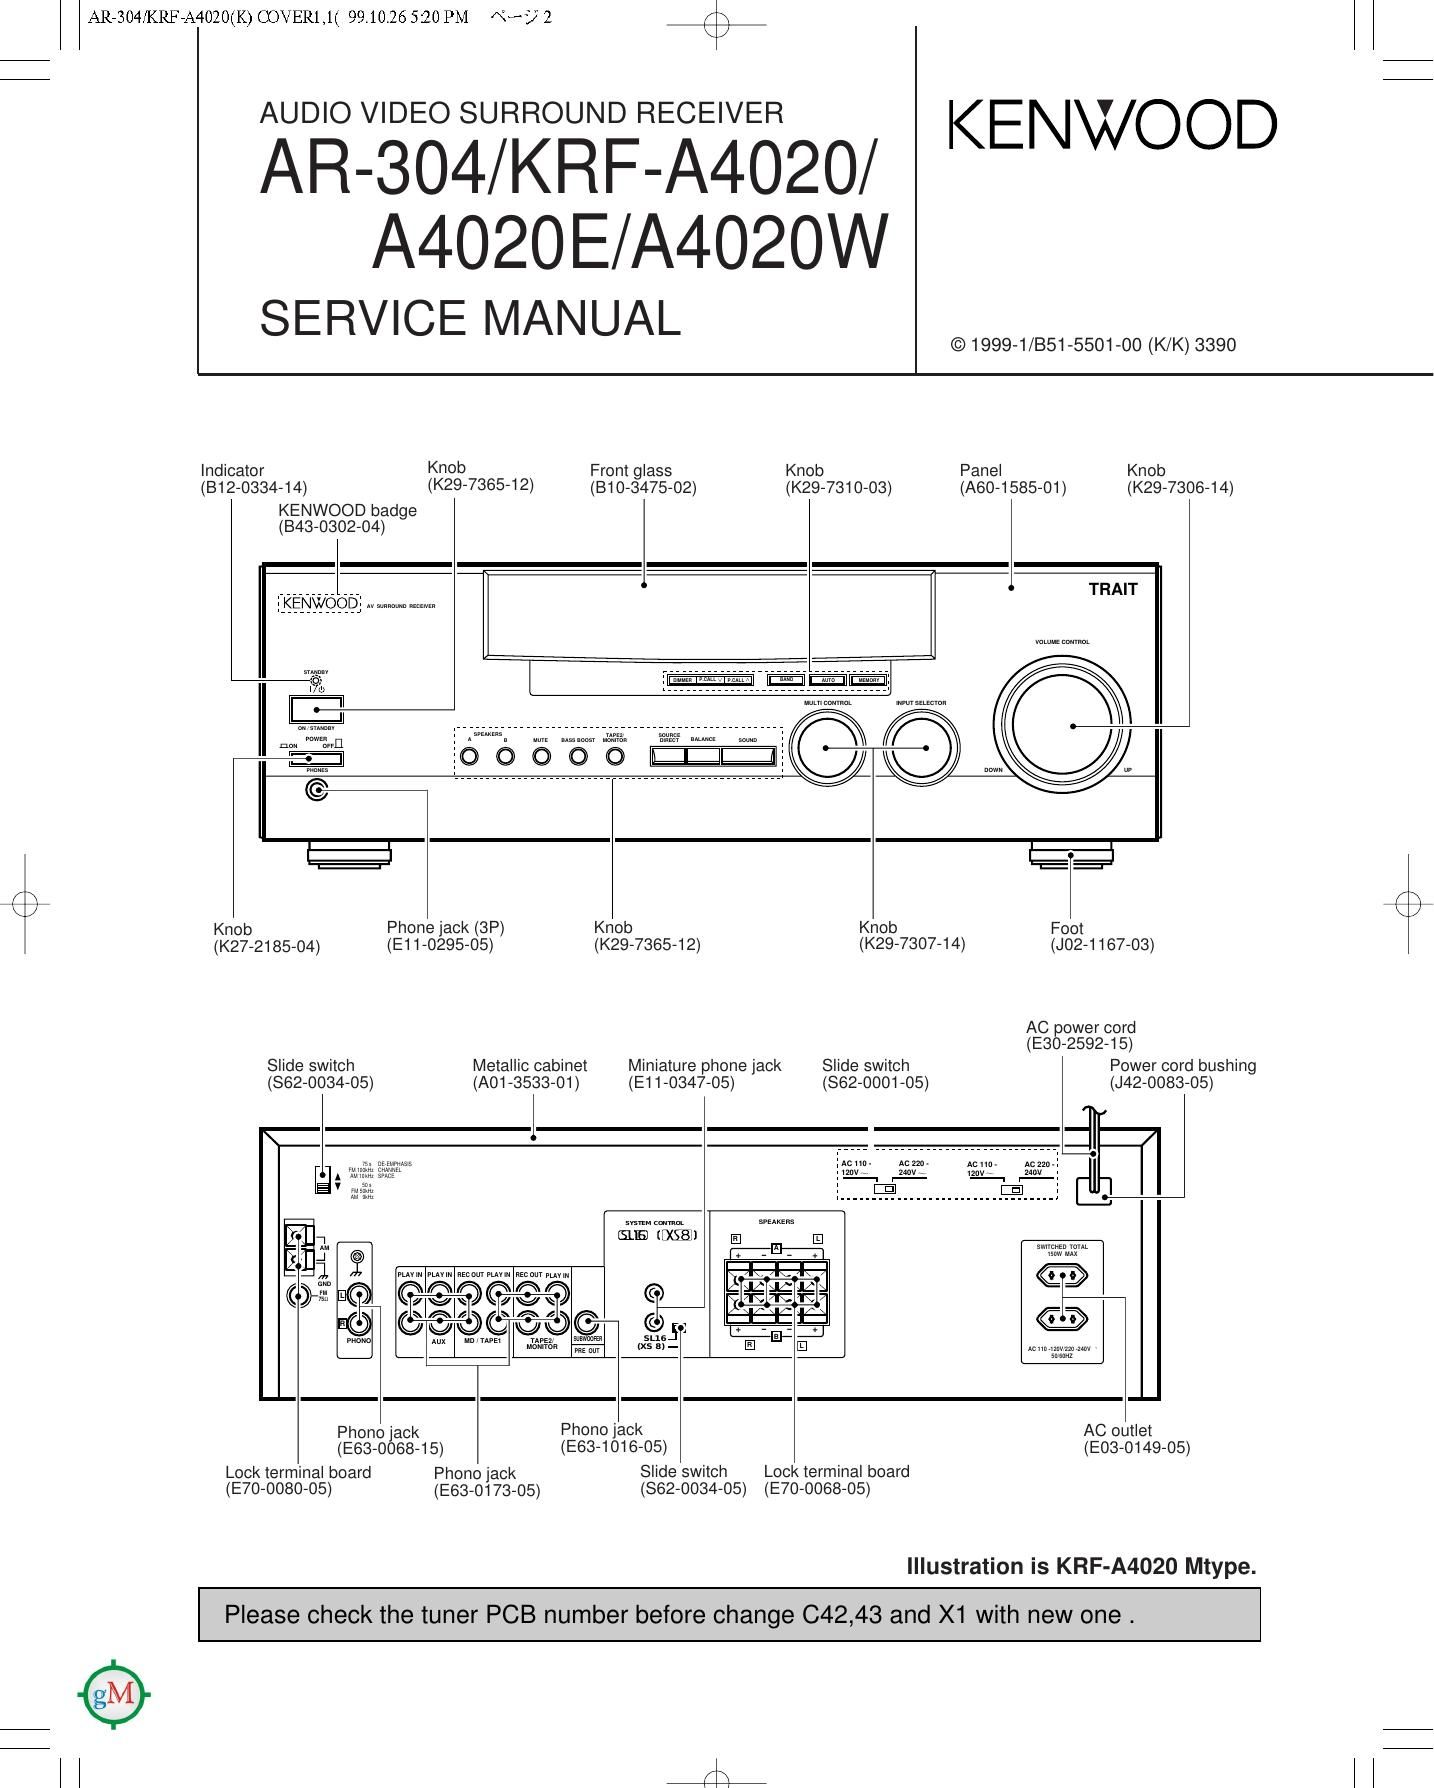 Kenwood AR 304 Service Manual